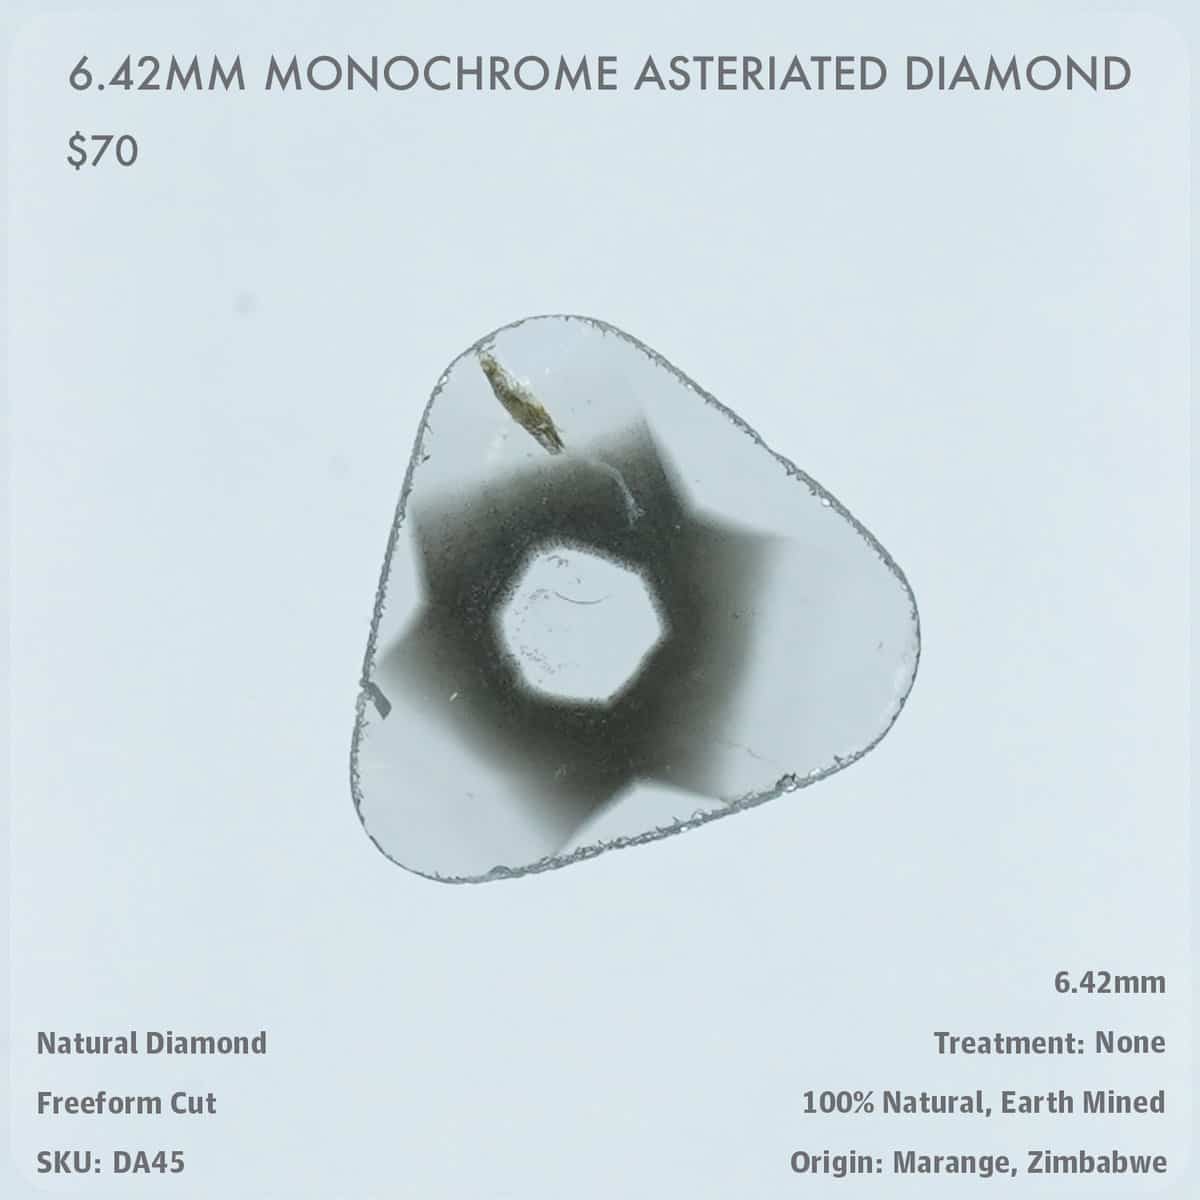 6.42mm Monochrome Asteriated Diamond